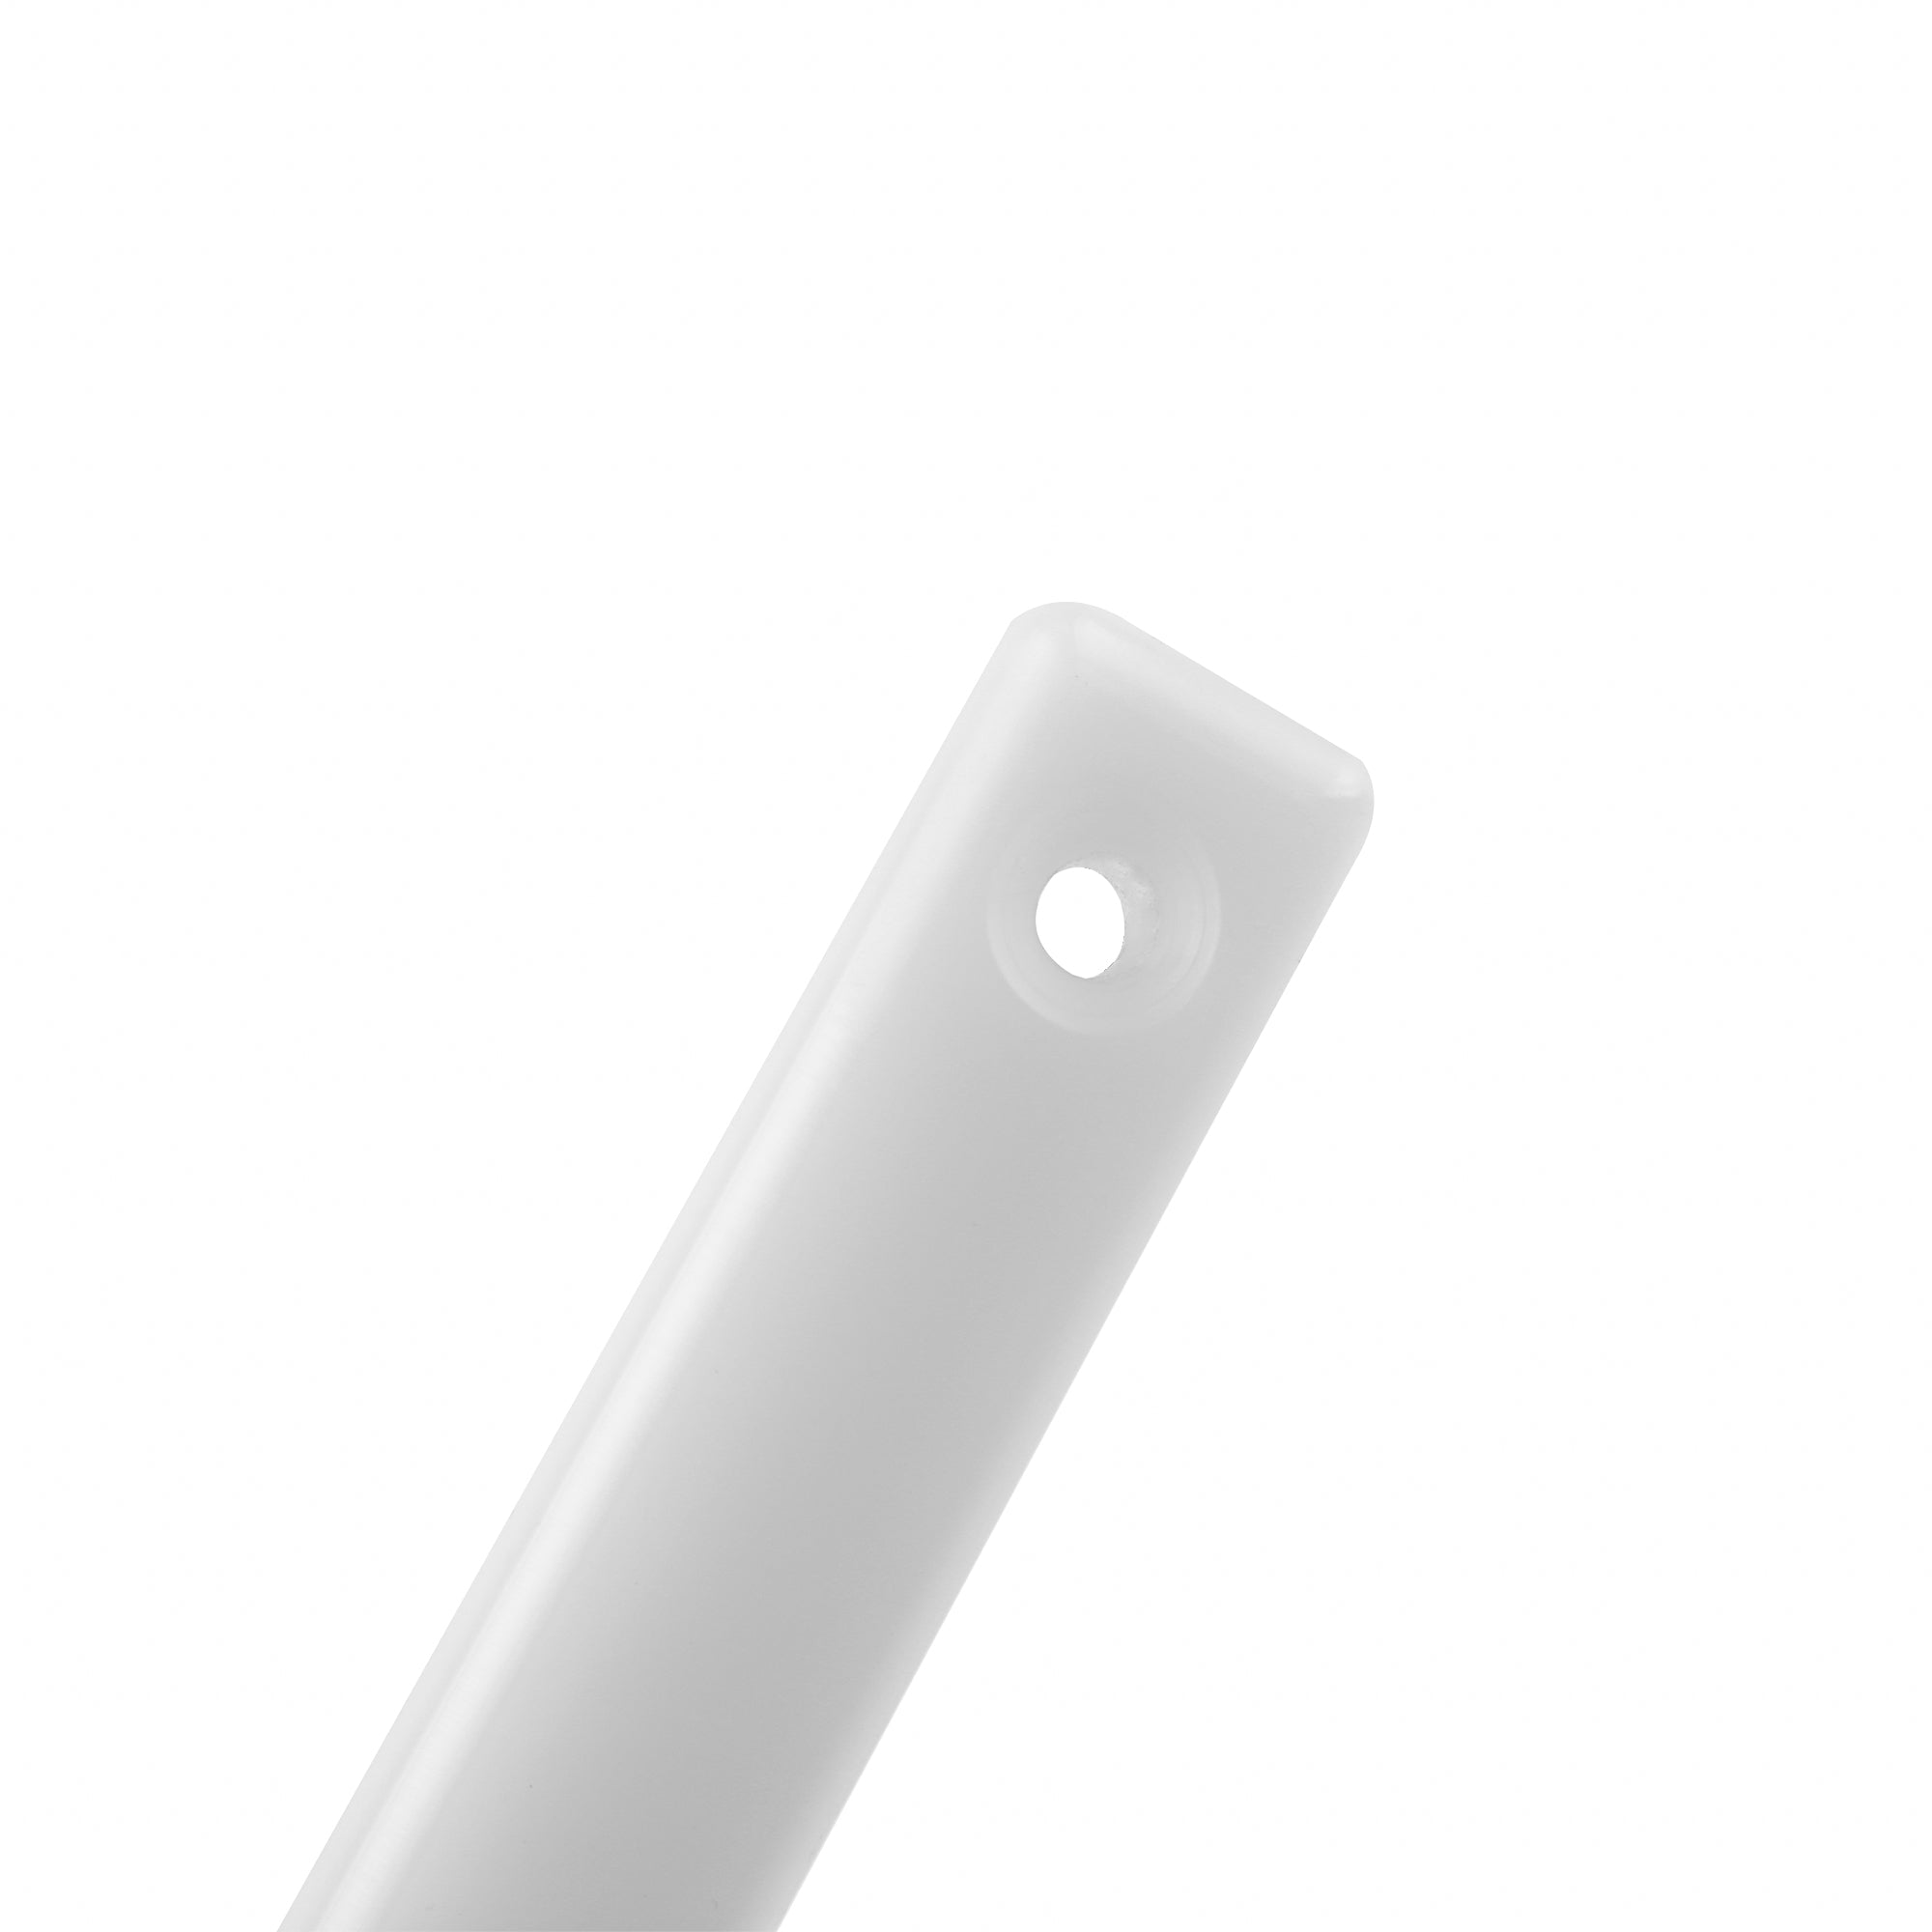 Omrøringsspatel flad - 65 cm - hvid